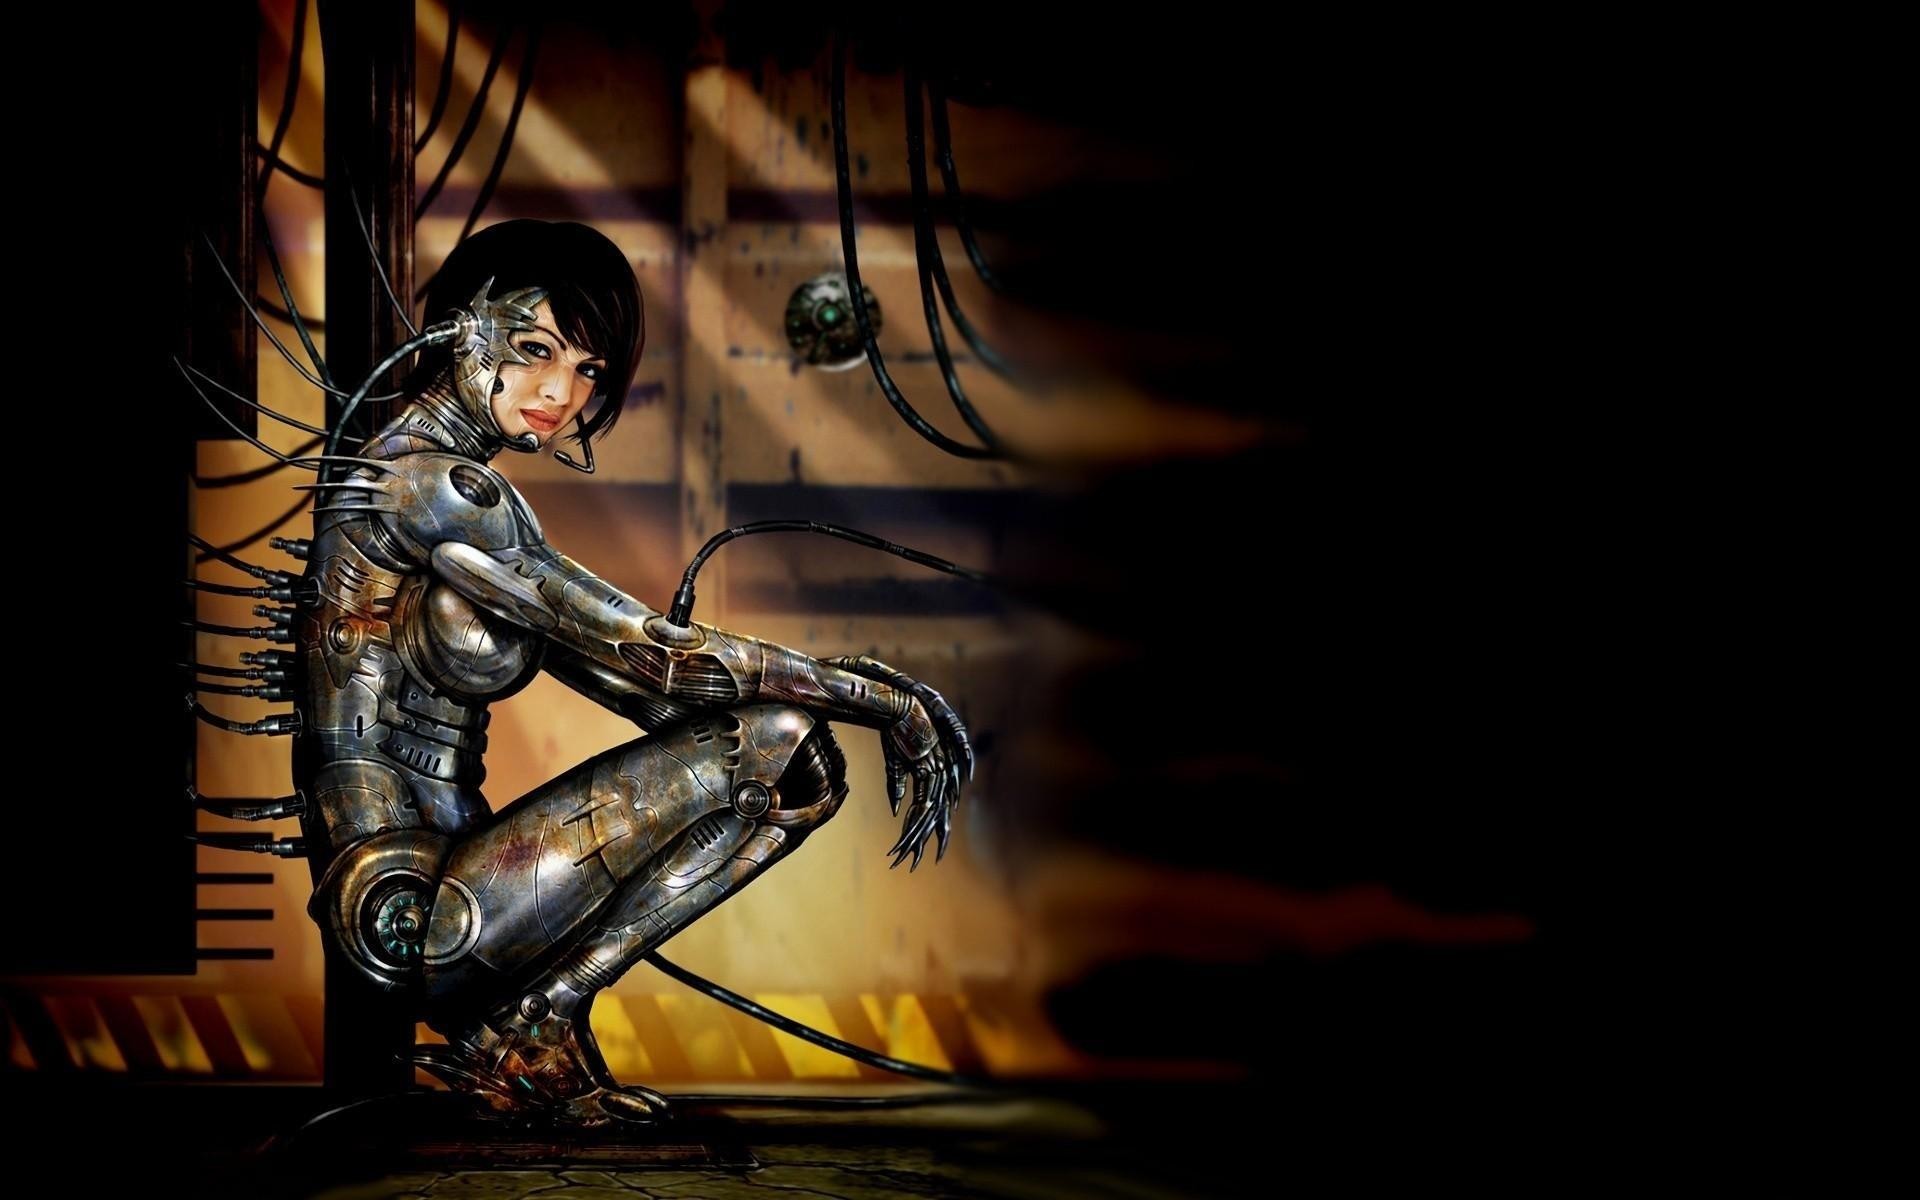 General 1920x1200 bionics cyberpunk futuristic science fiction women dark hair looking at viewer machine cyborg women artwork science fiction